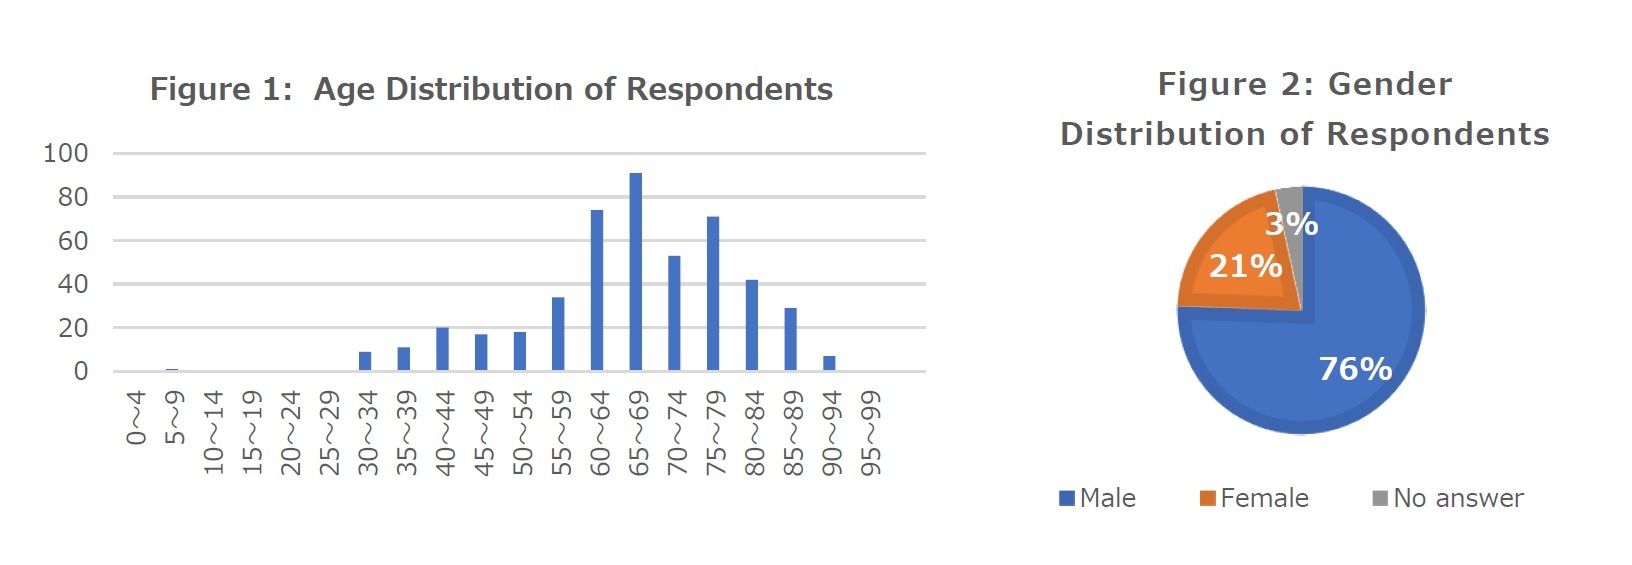 Figure 1: Age Distribution of Respondents/Figure 2: Gender 
Distribution of Respondents